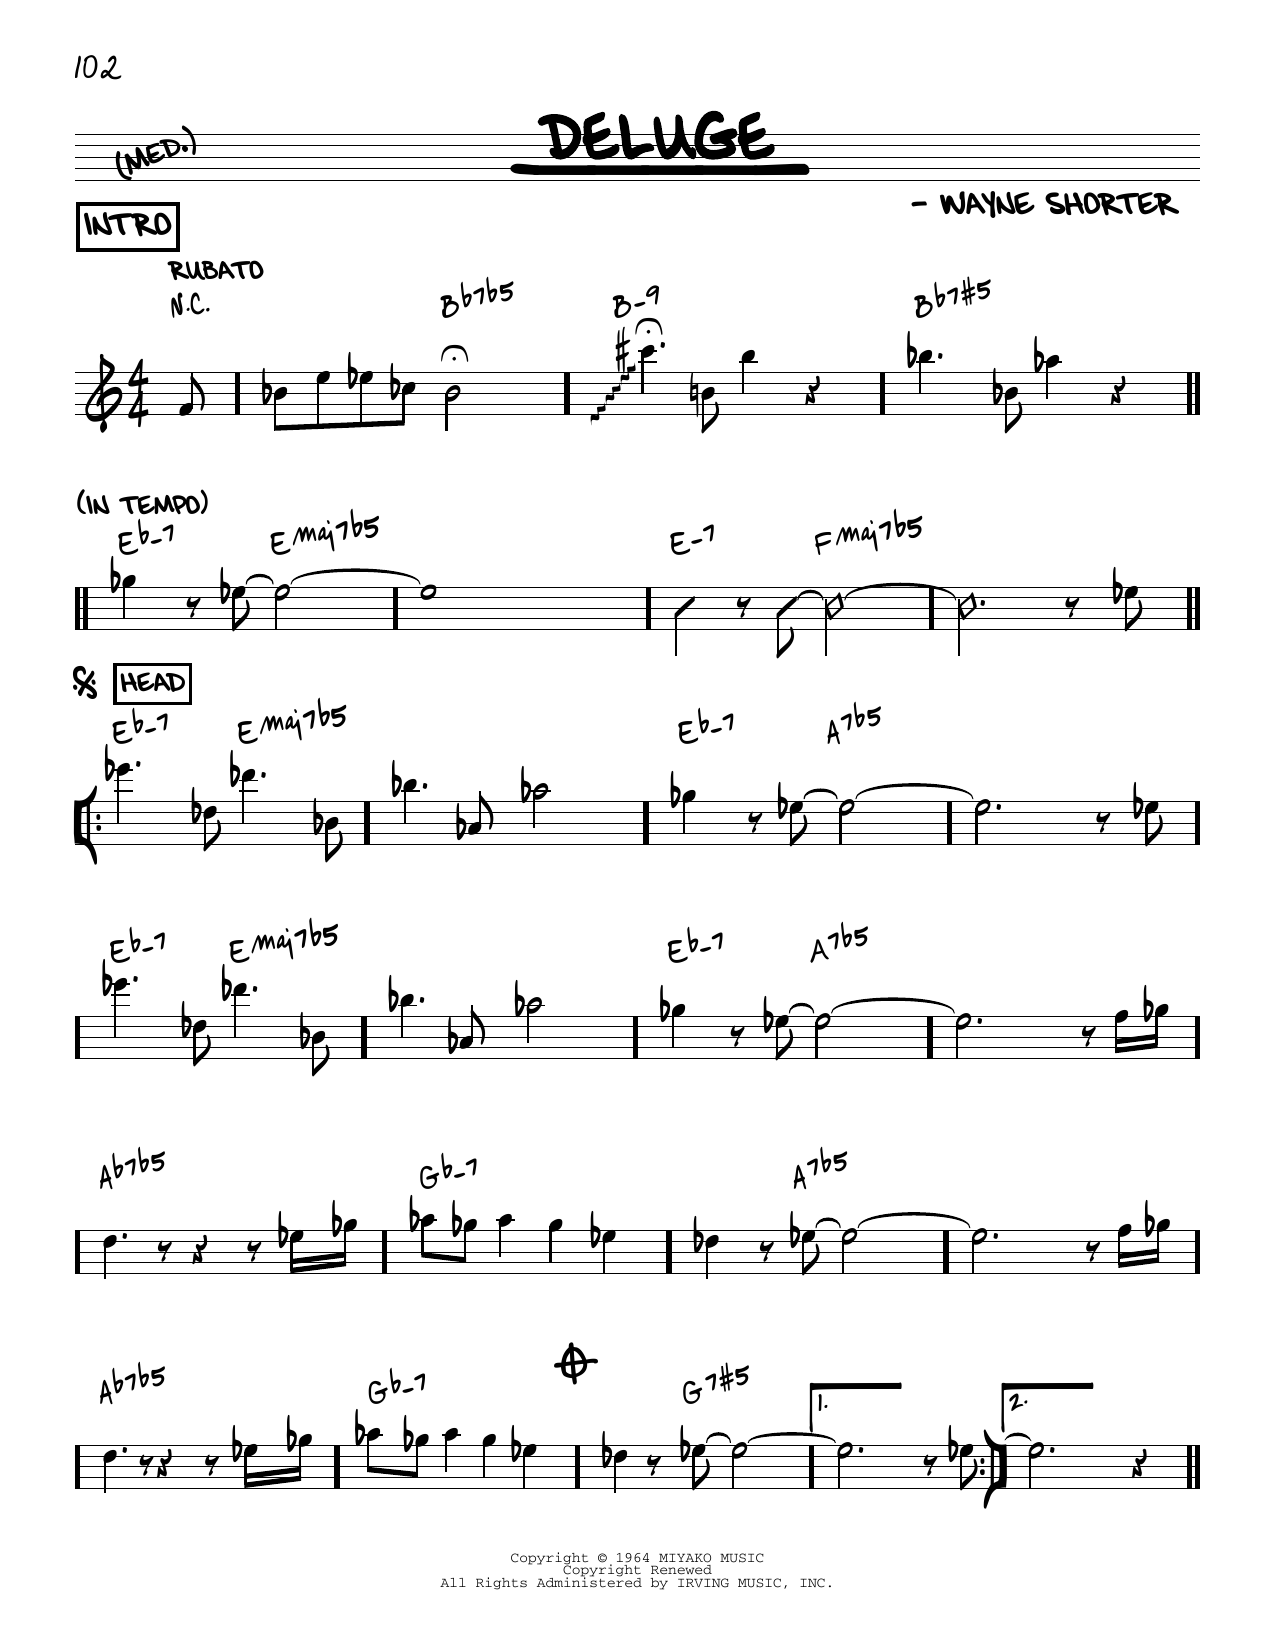 Download Wayne Shorter Deluge [Reharmonized version] (arr. Jac Sheet Music